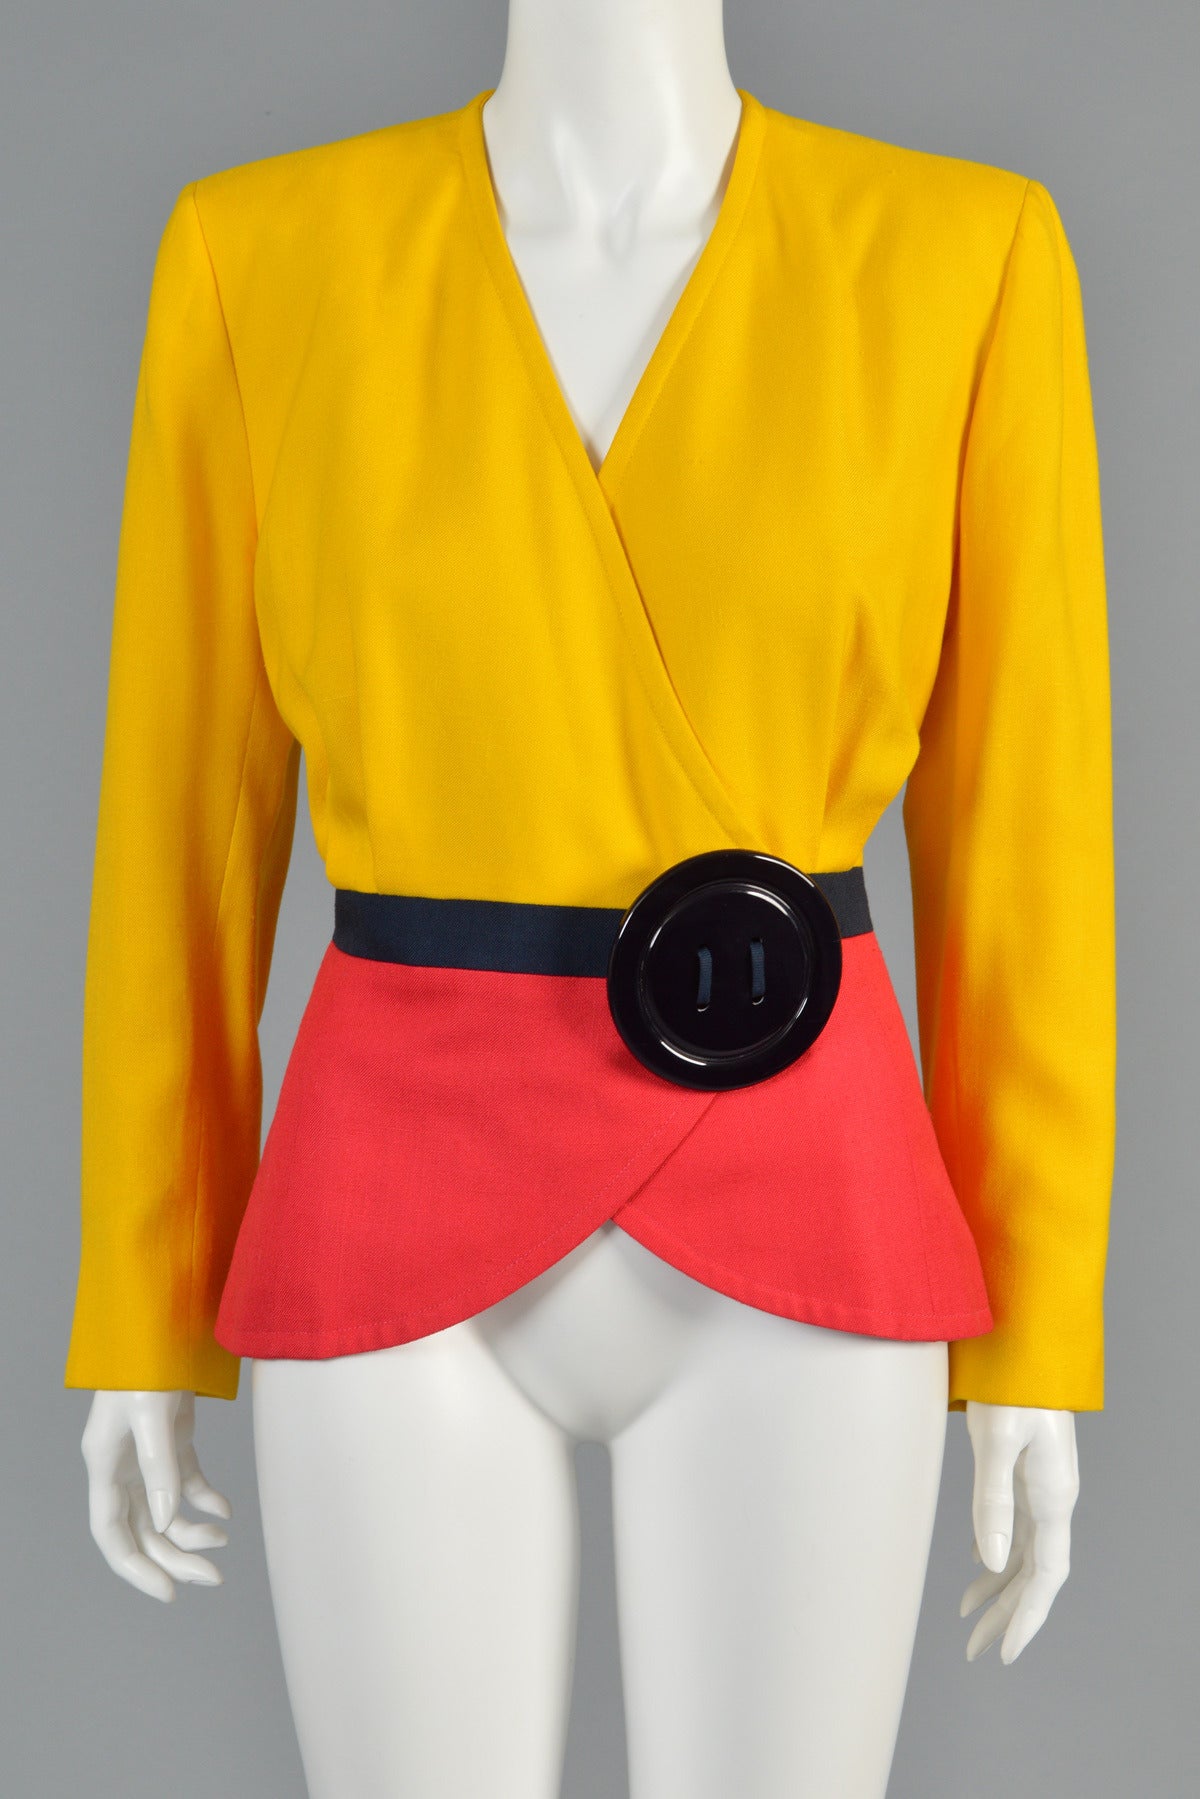 Orange 1989 Oscar de la Renta for Pierre Balmain Haute Couture Colorblocked Jacket For Sale